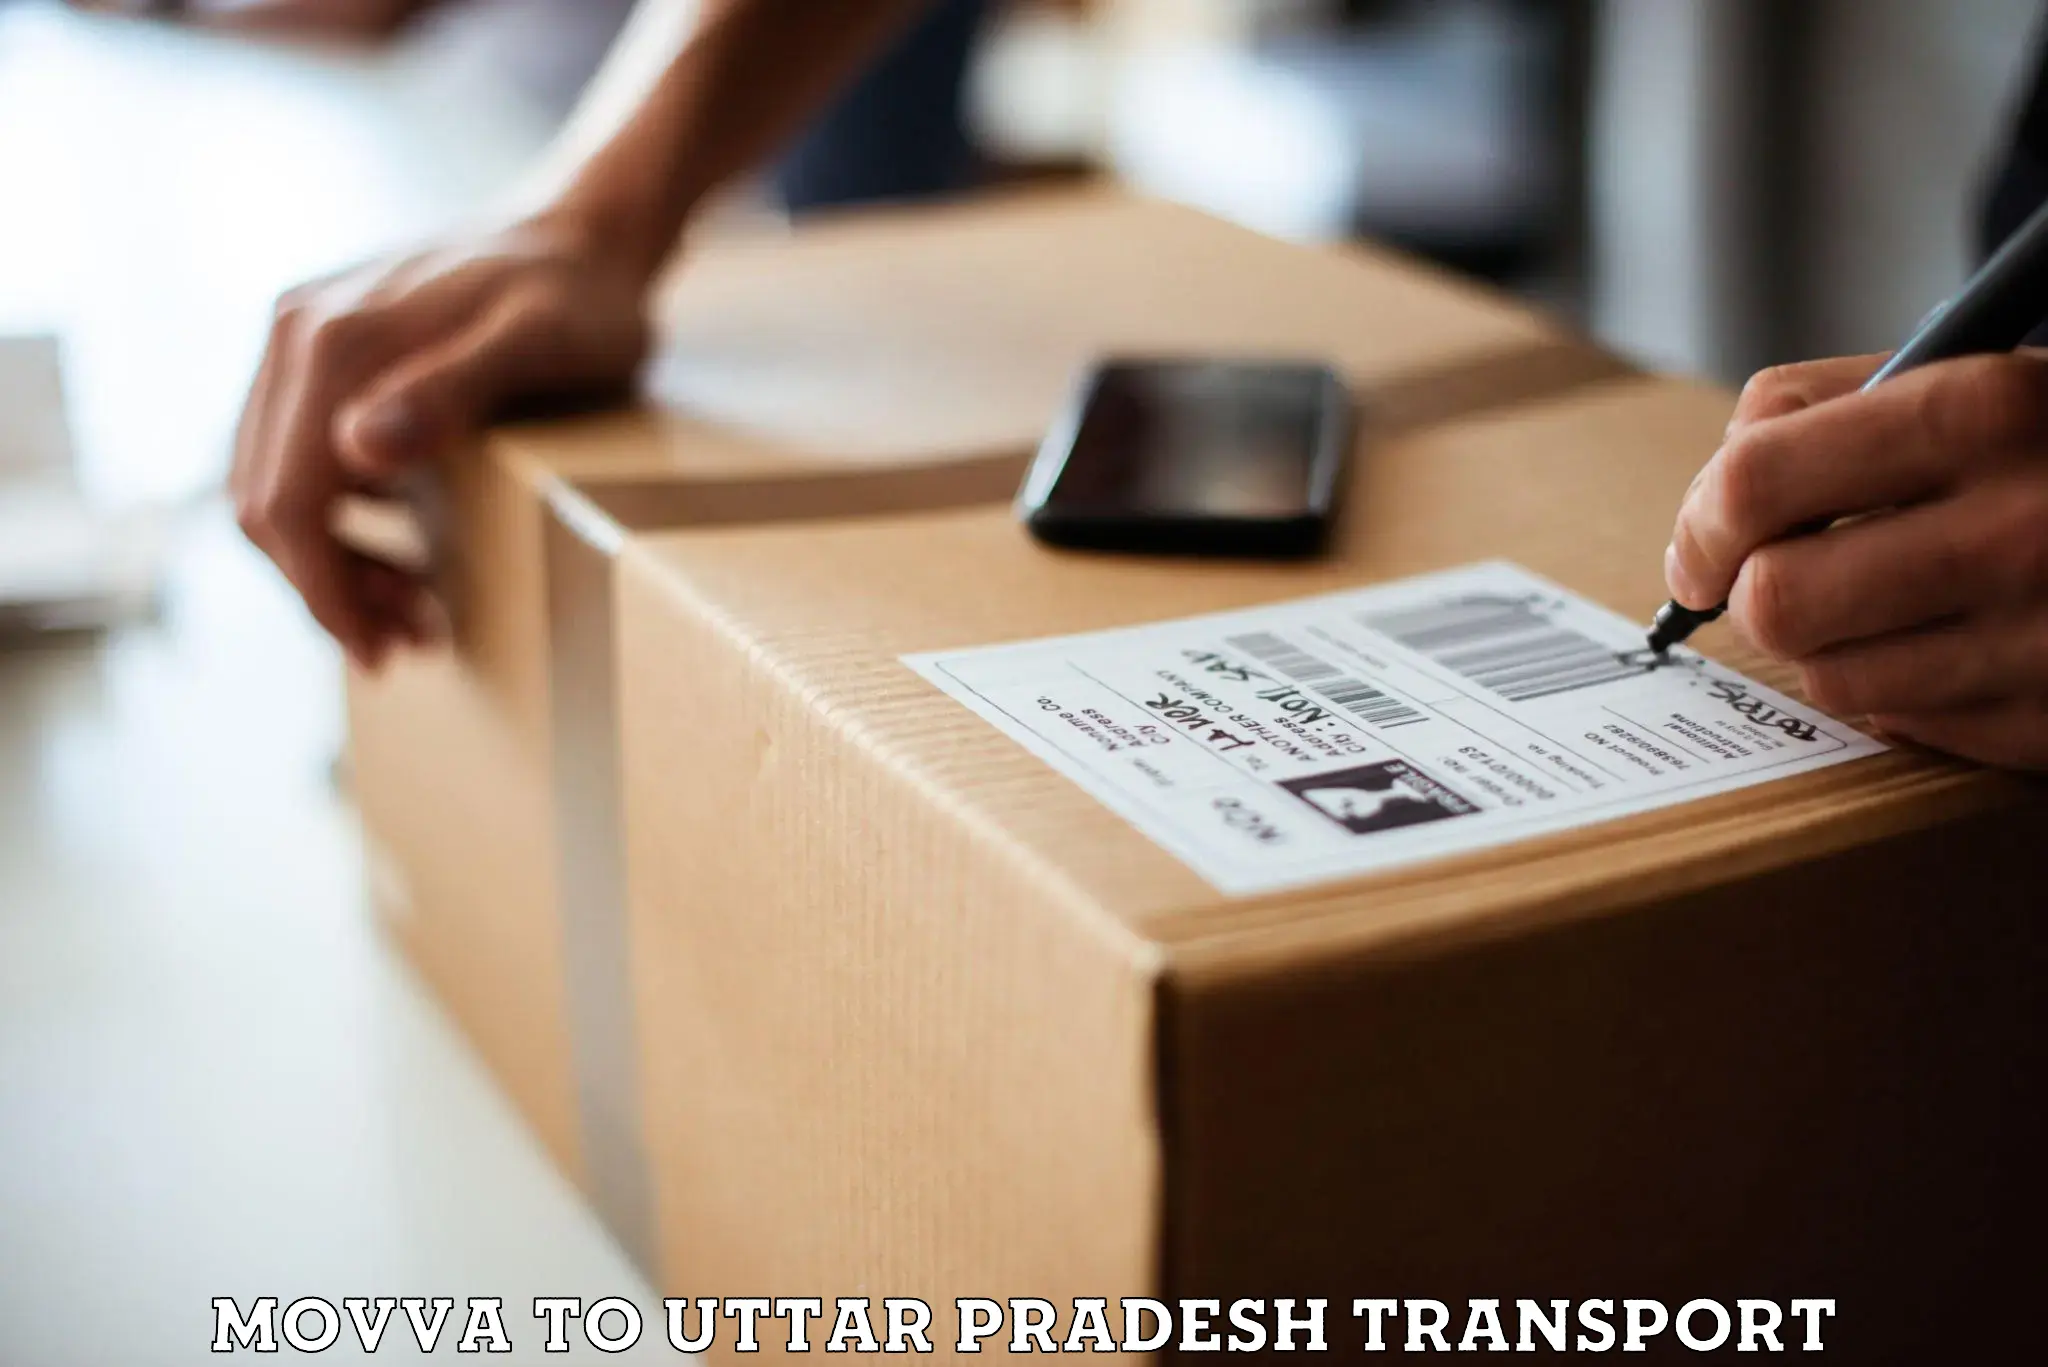 Nearest transport service Movva to Varanasi